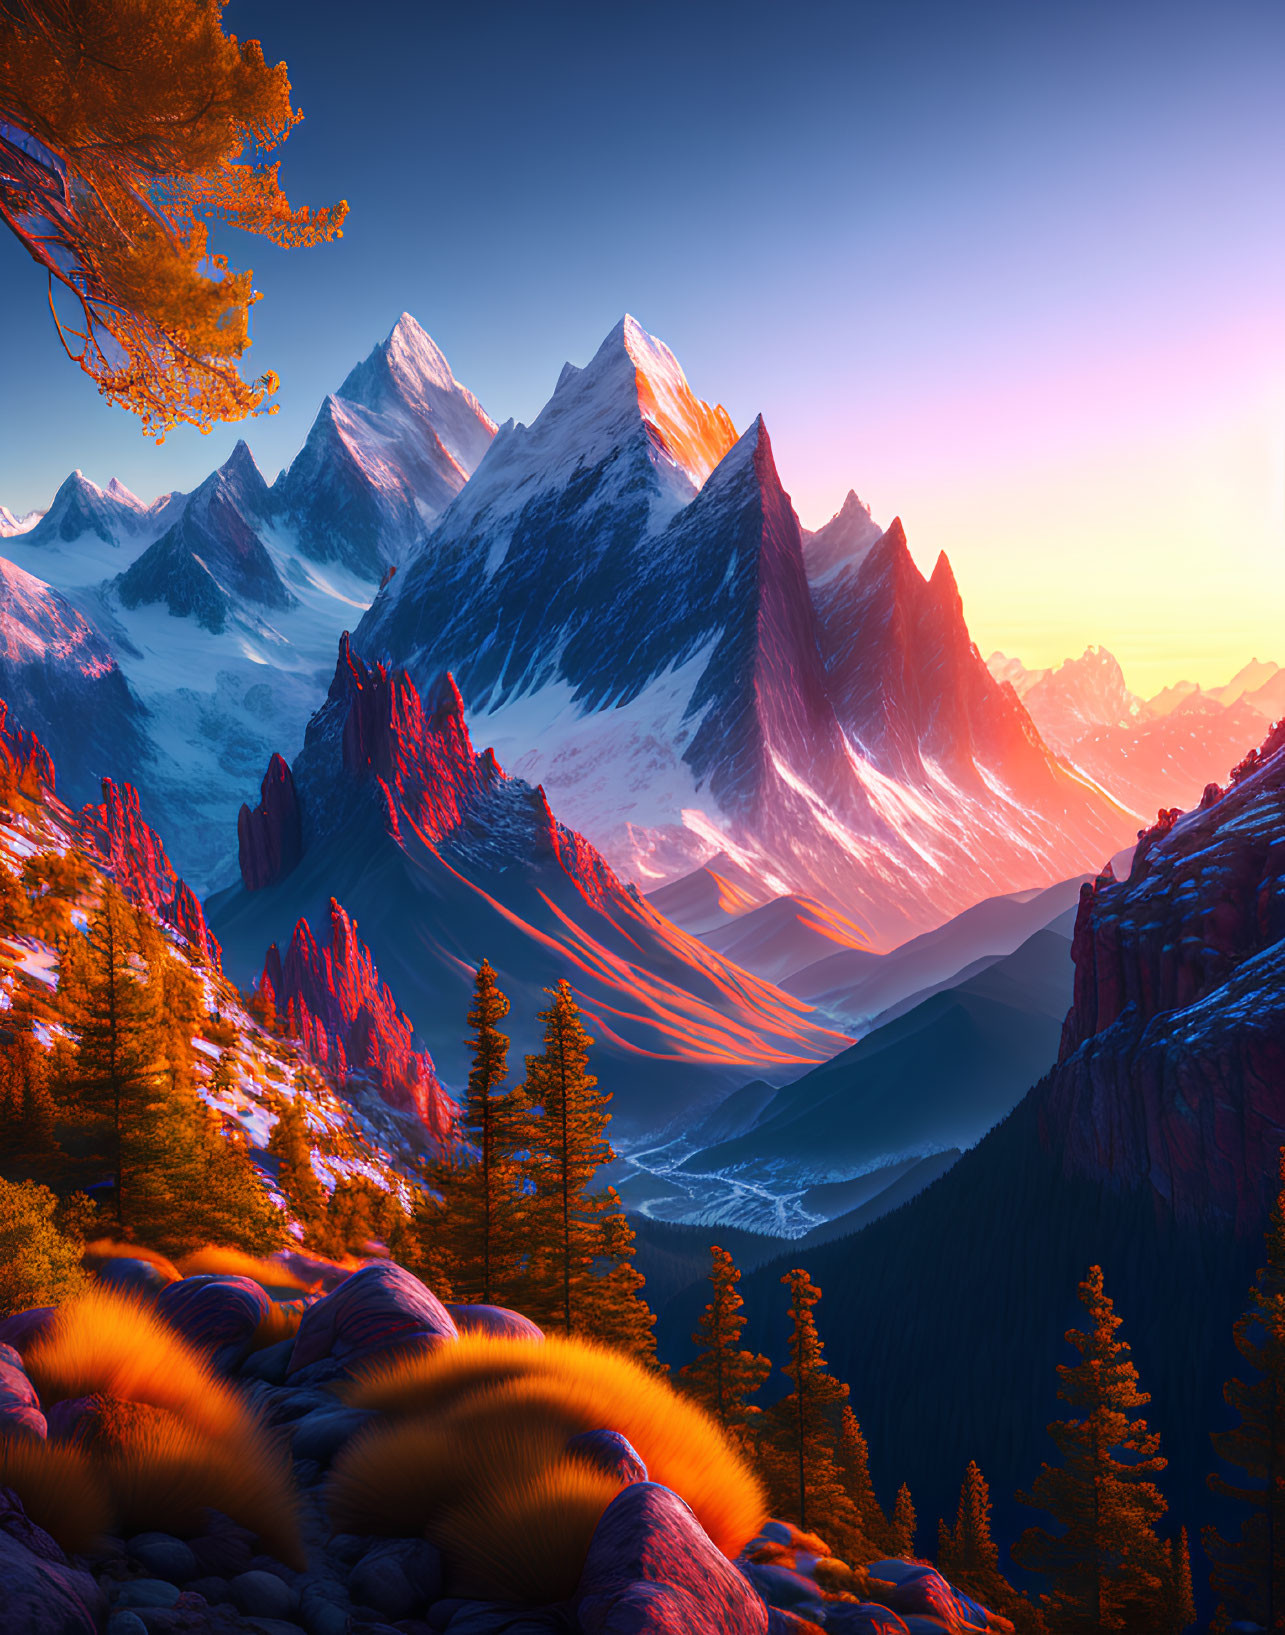 Snow-capped peaks, river, autumn trees in vibrant mountain sunrise landscape